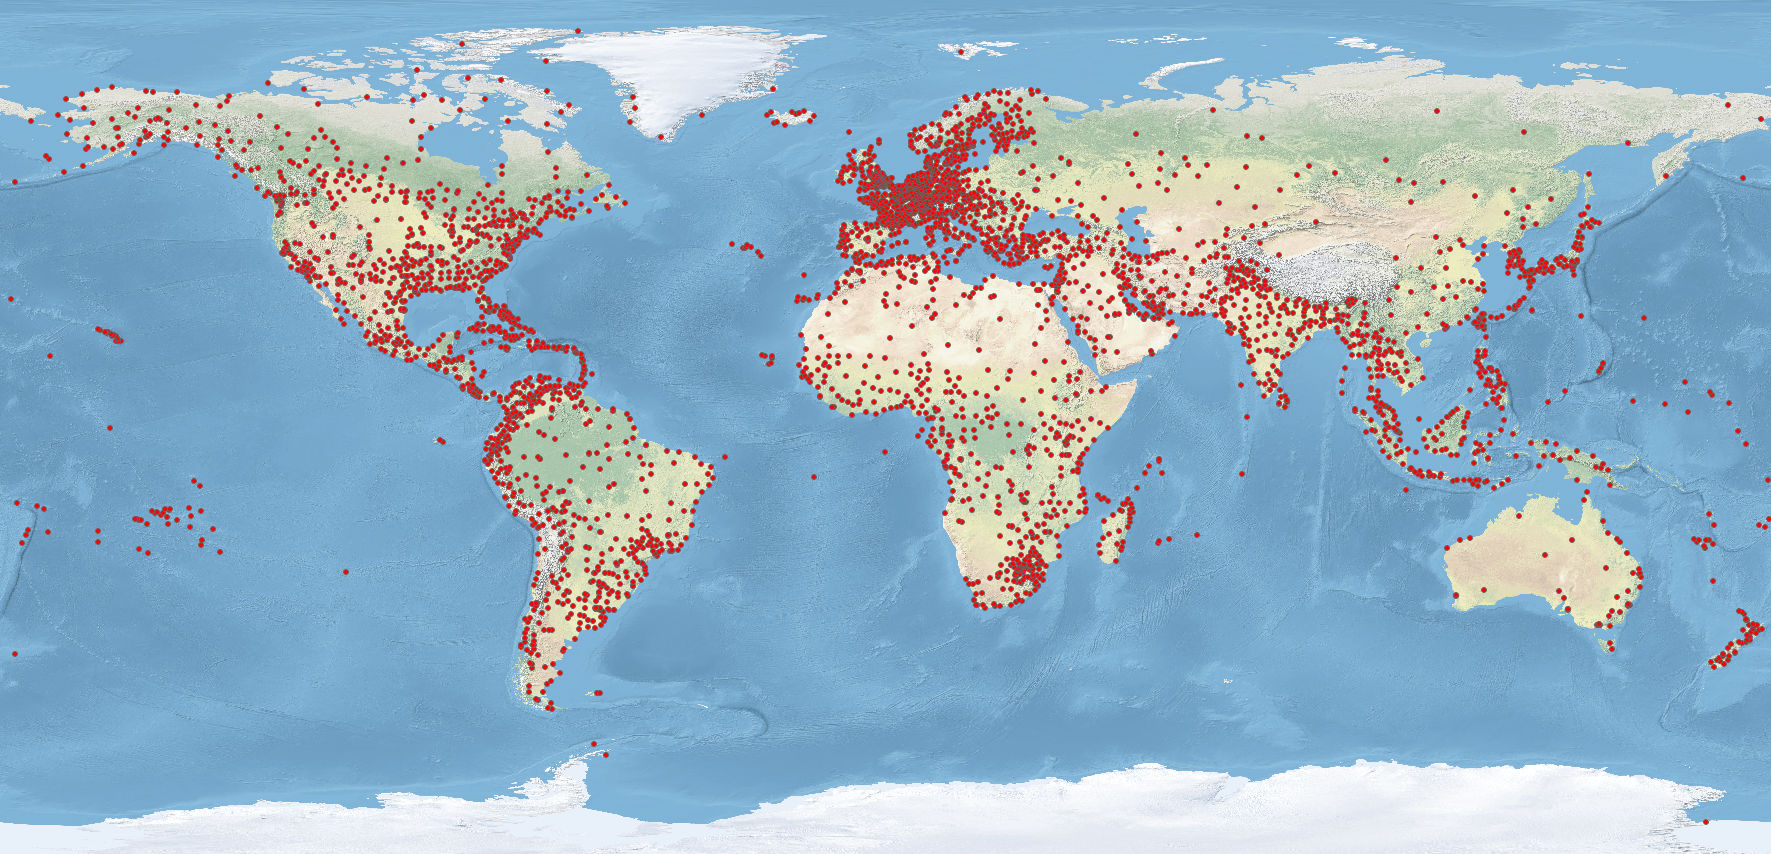 Global Airport Database Map - Copyright Arash Partow